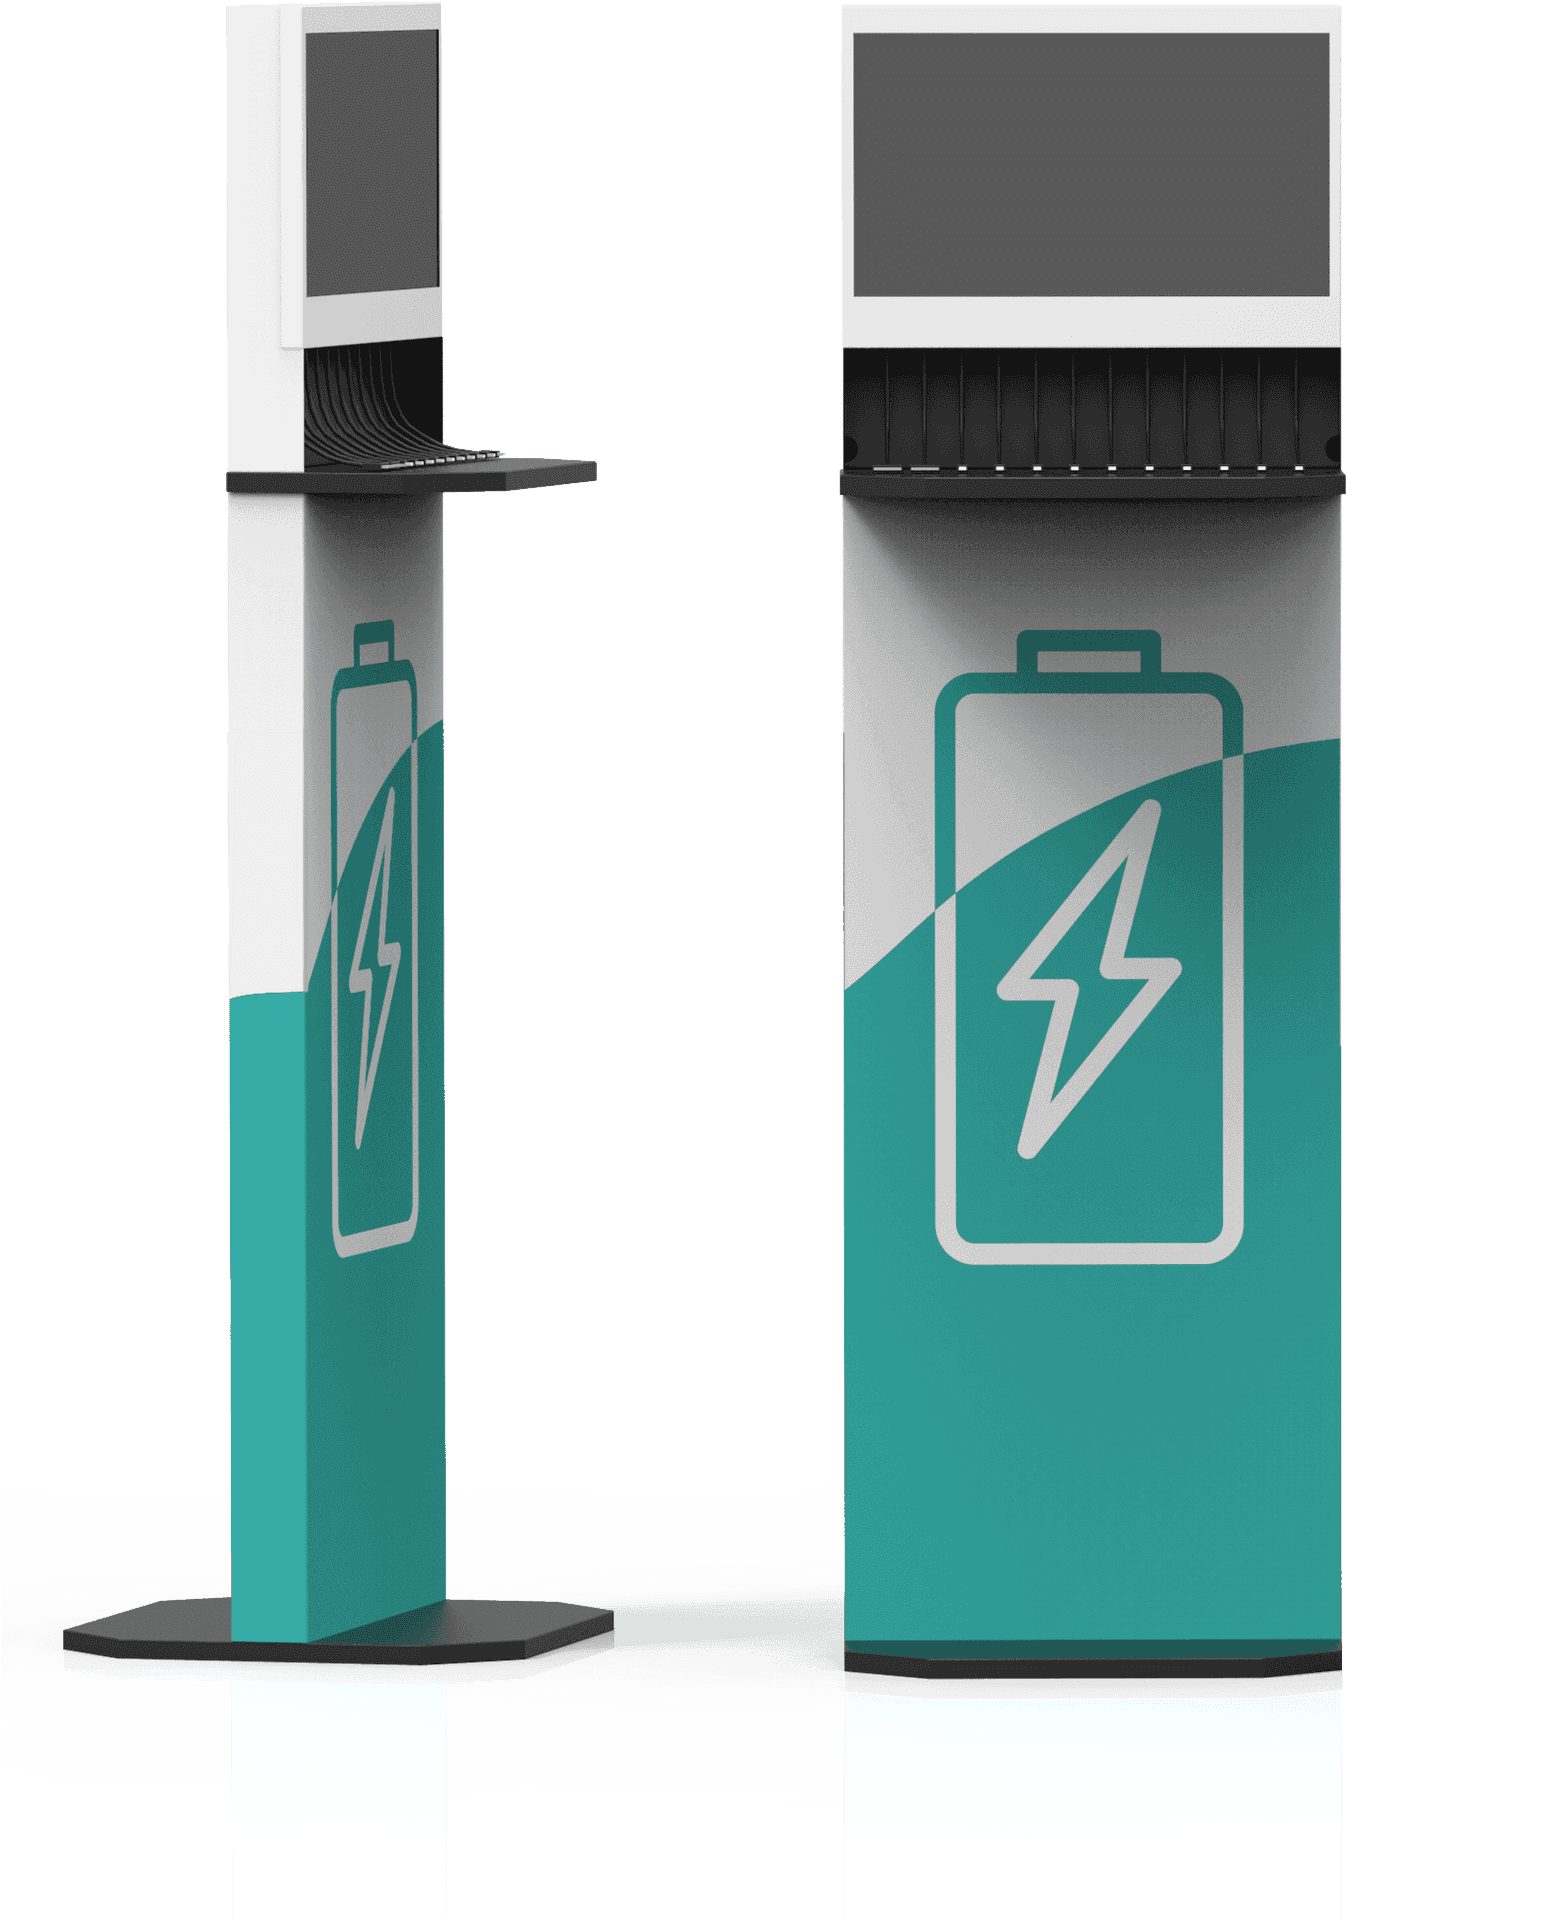 Mobile Phone Charging Station Design PNG image